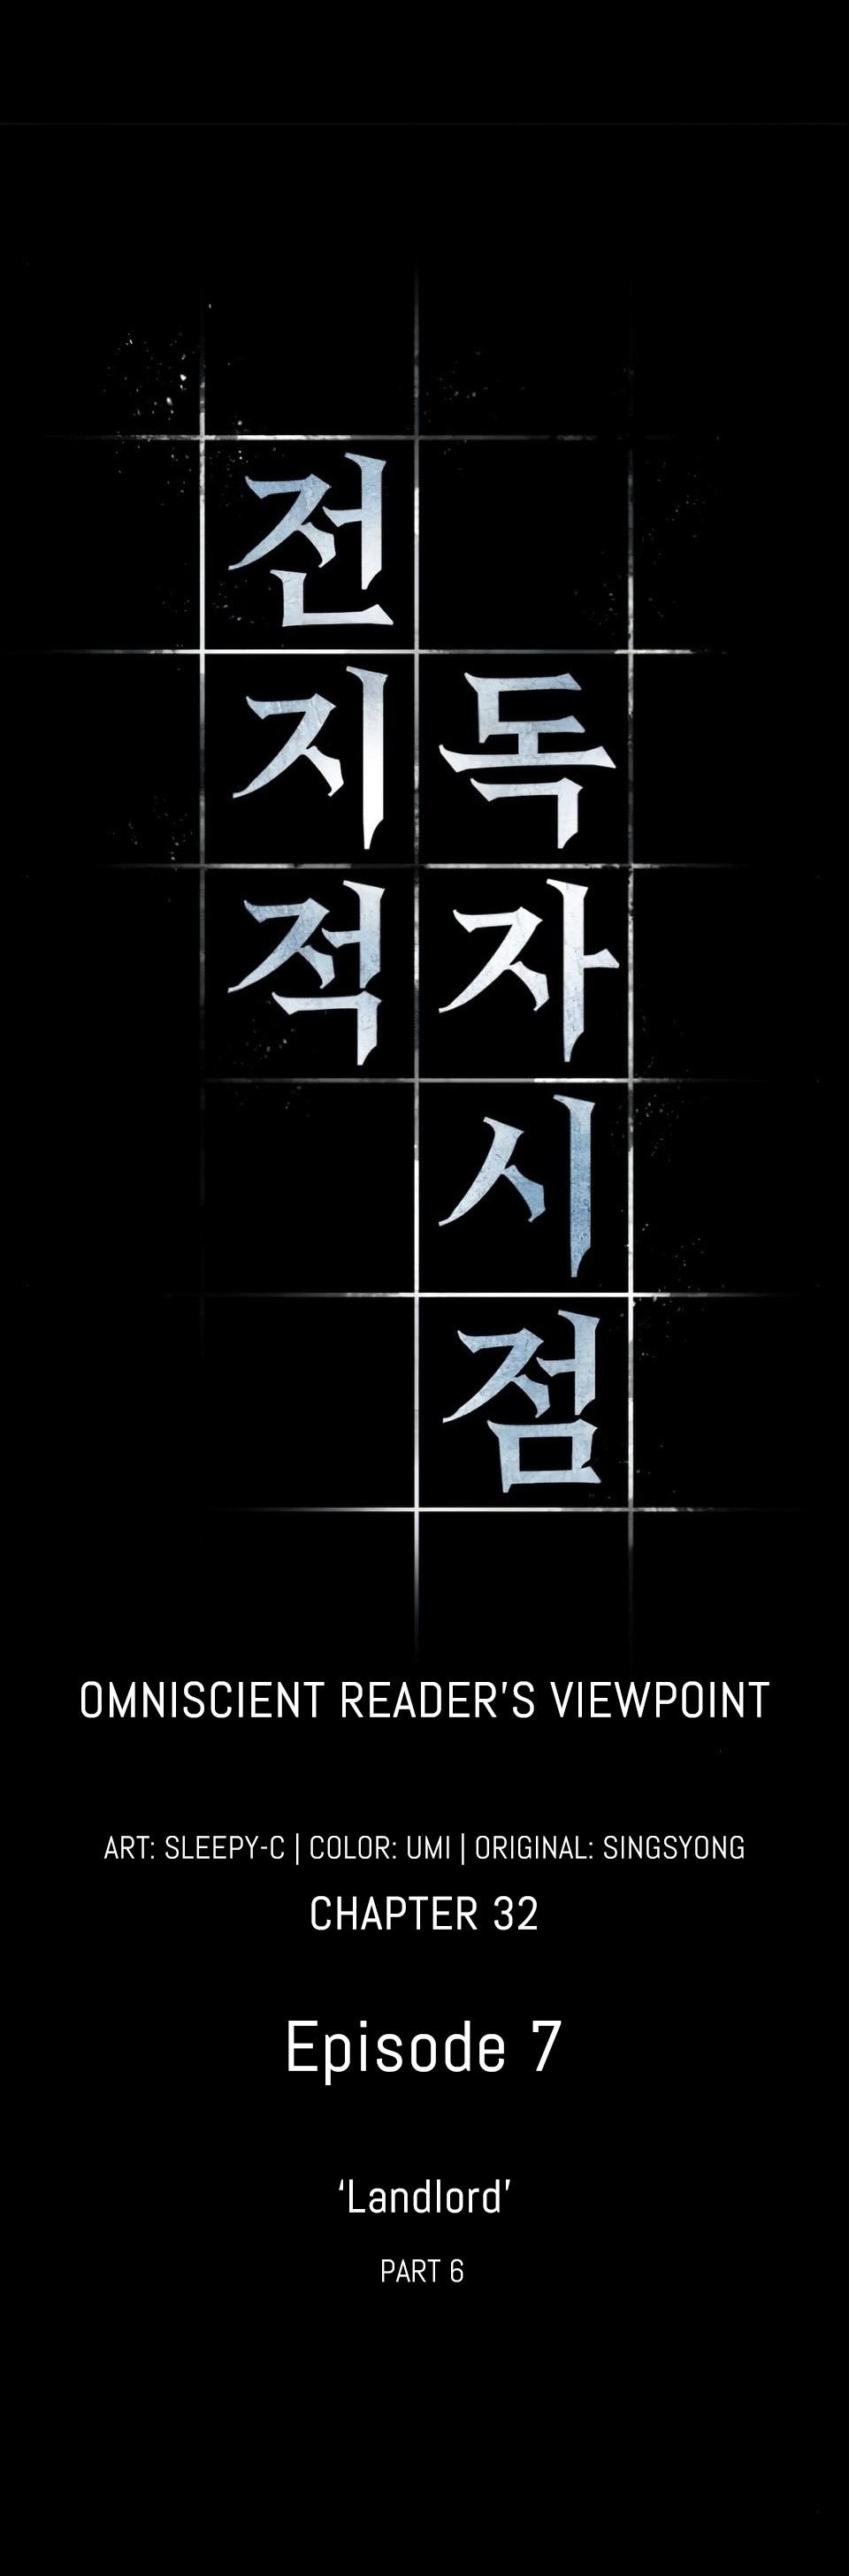 Omniscient Reader’s Viewpoint image